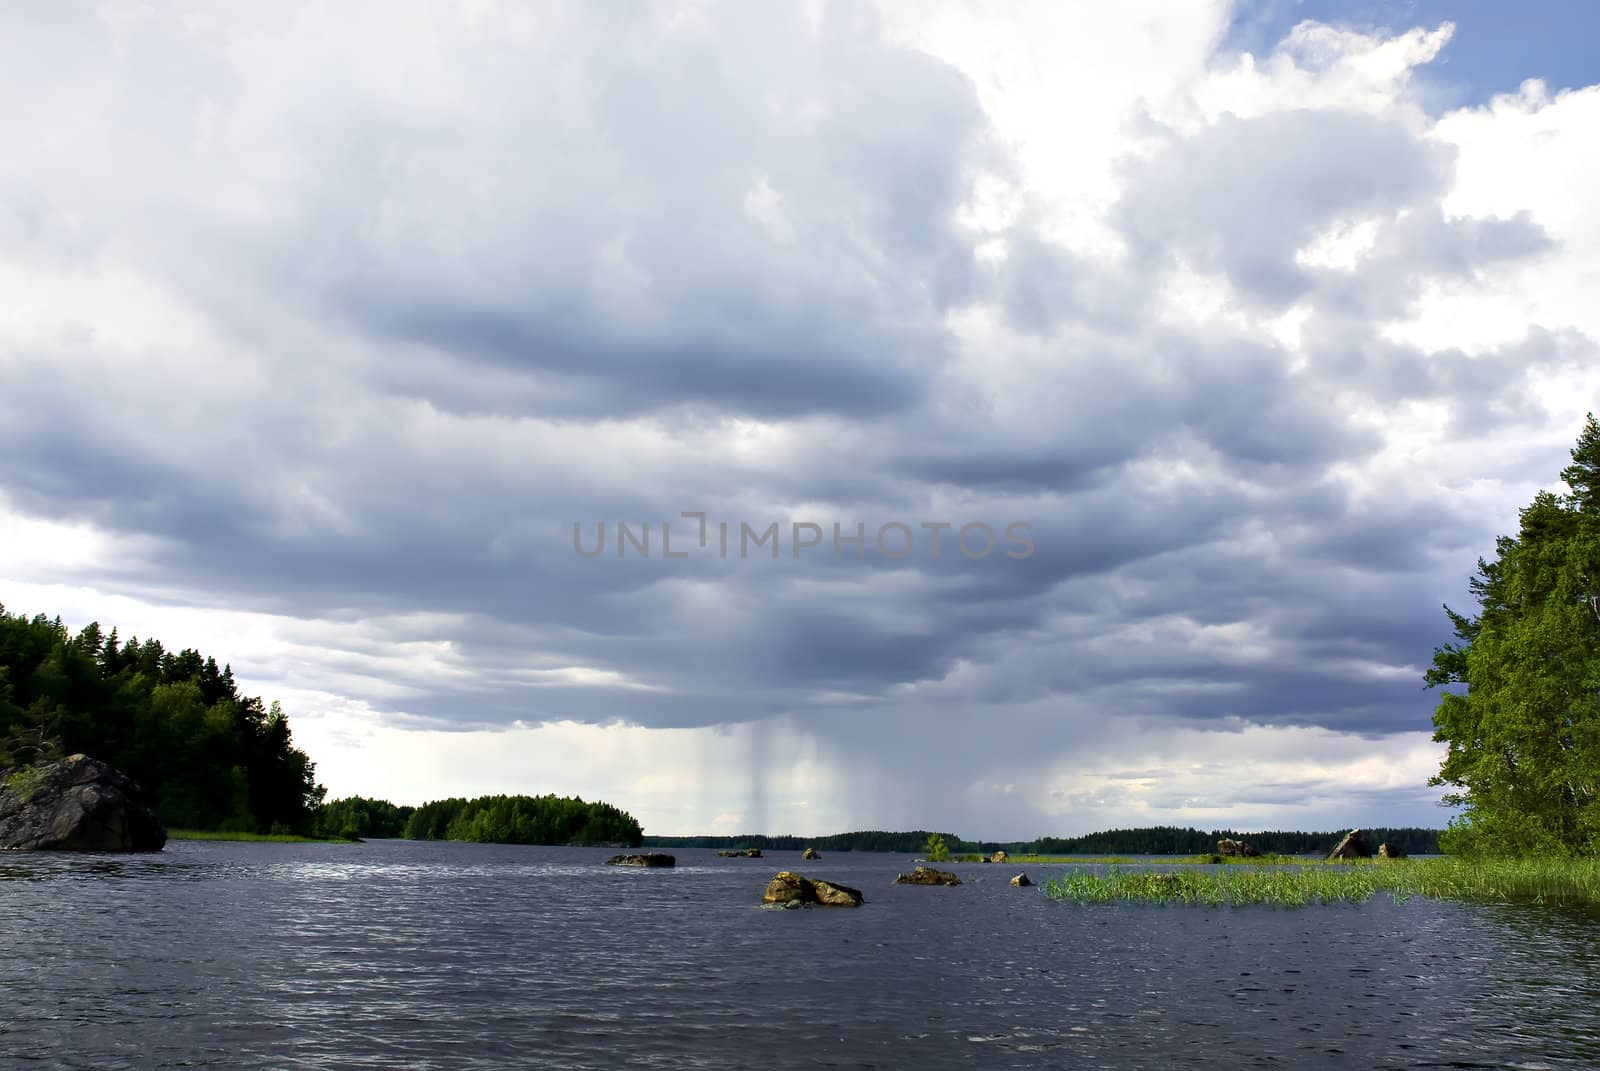 Cloudy sky with rain falling on lake